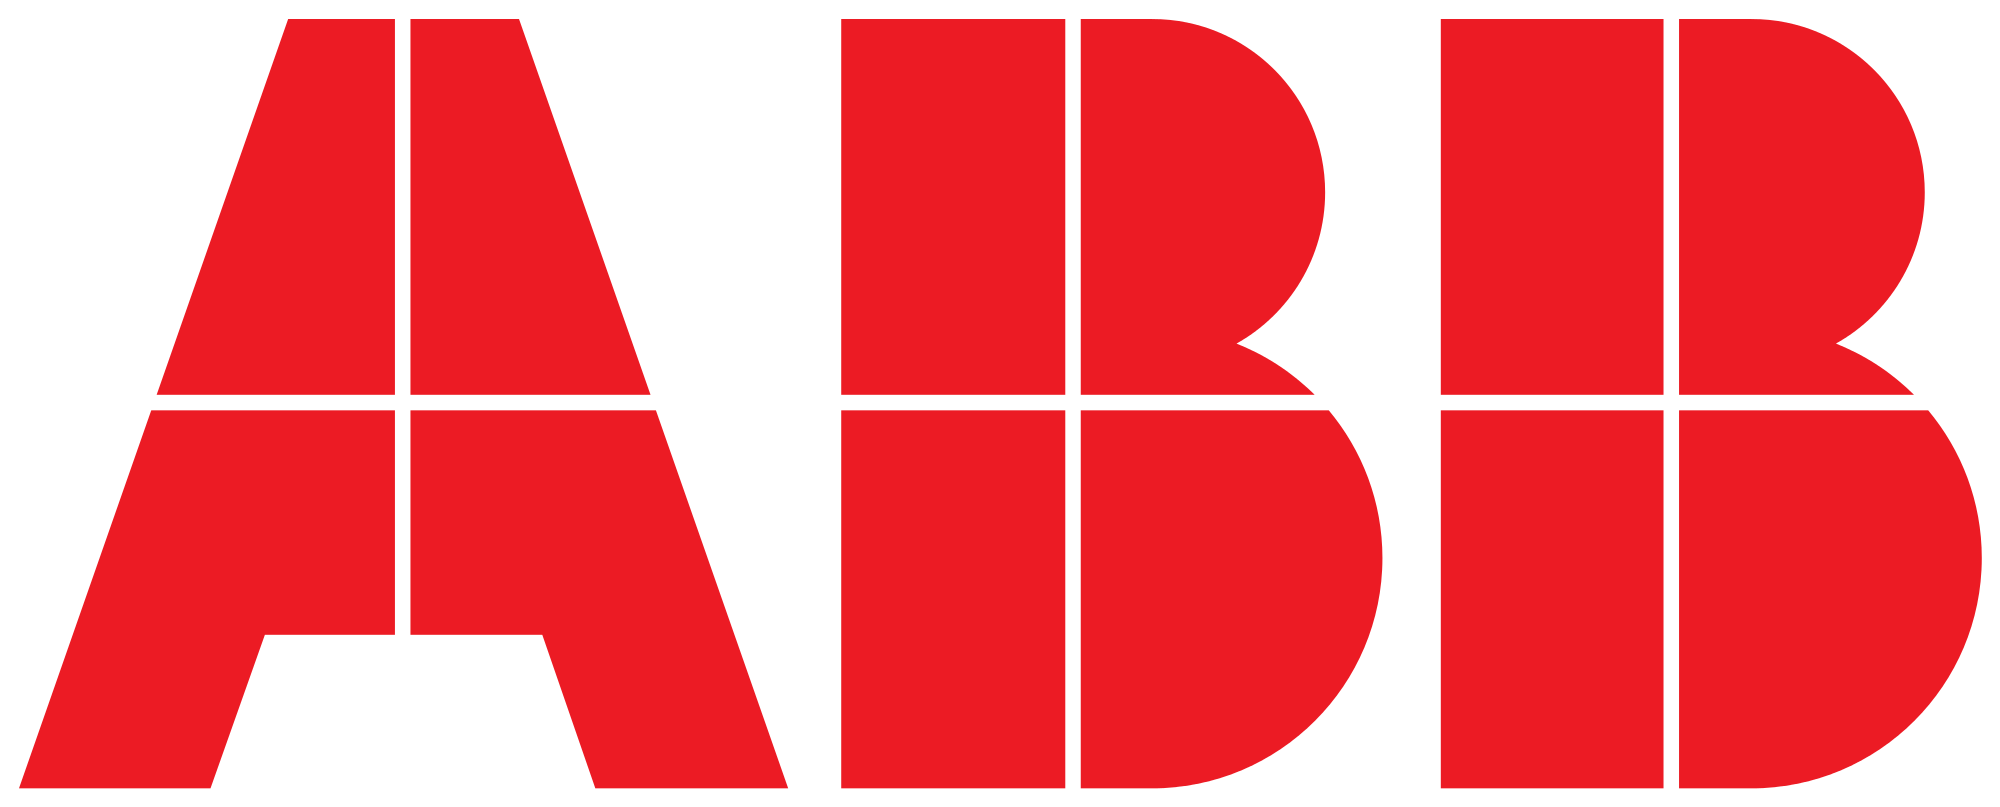 ABB Deutschland - ABB Group